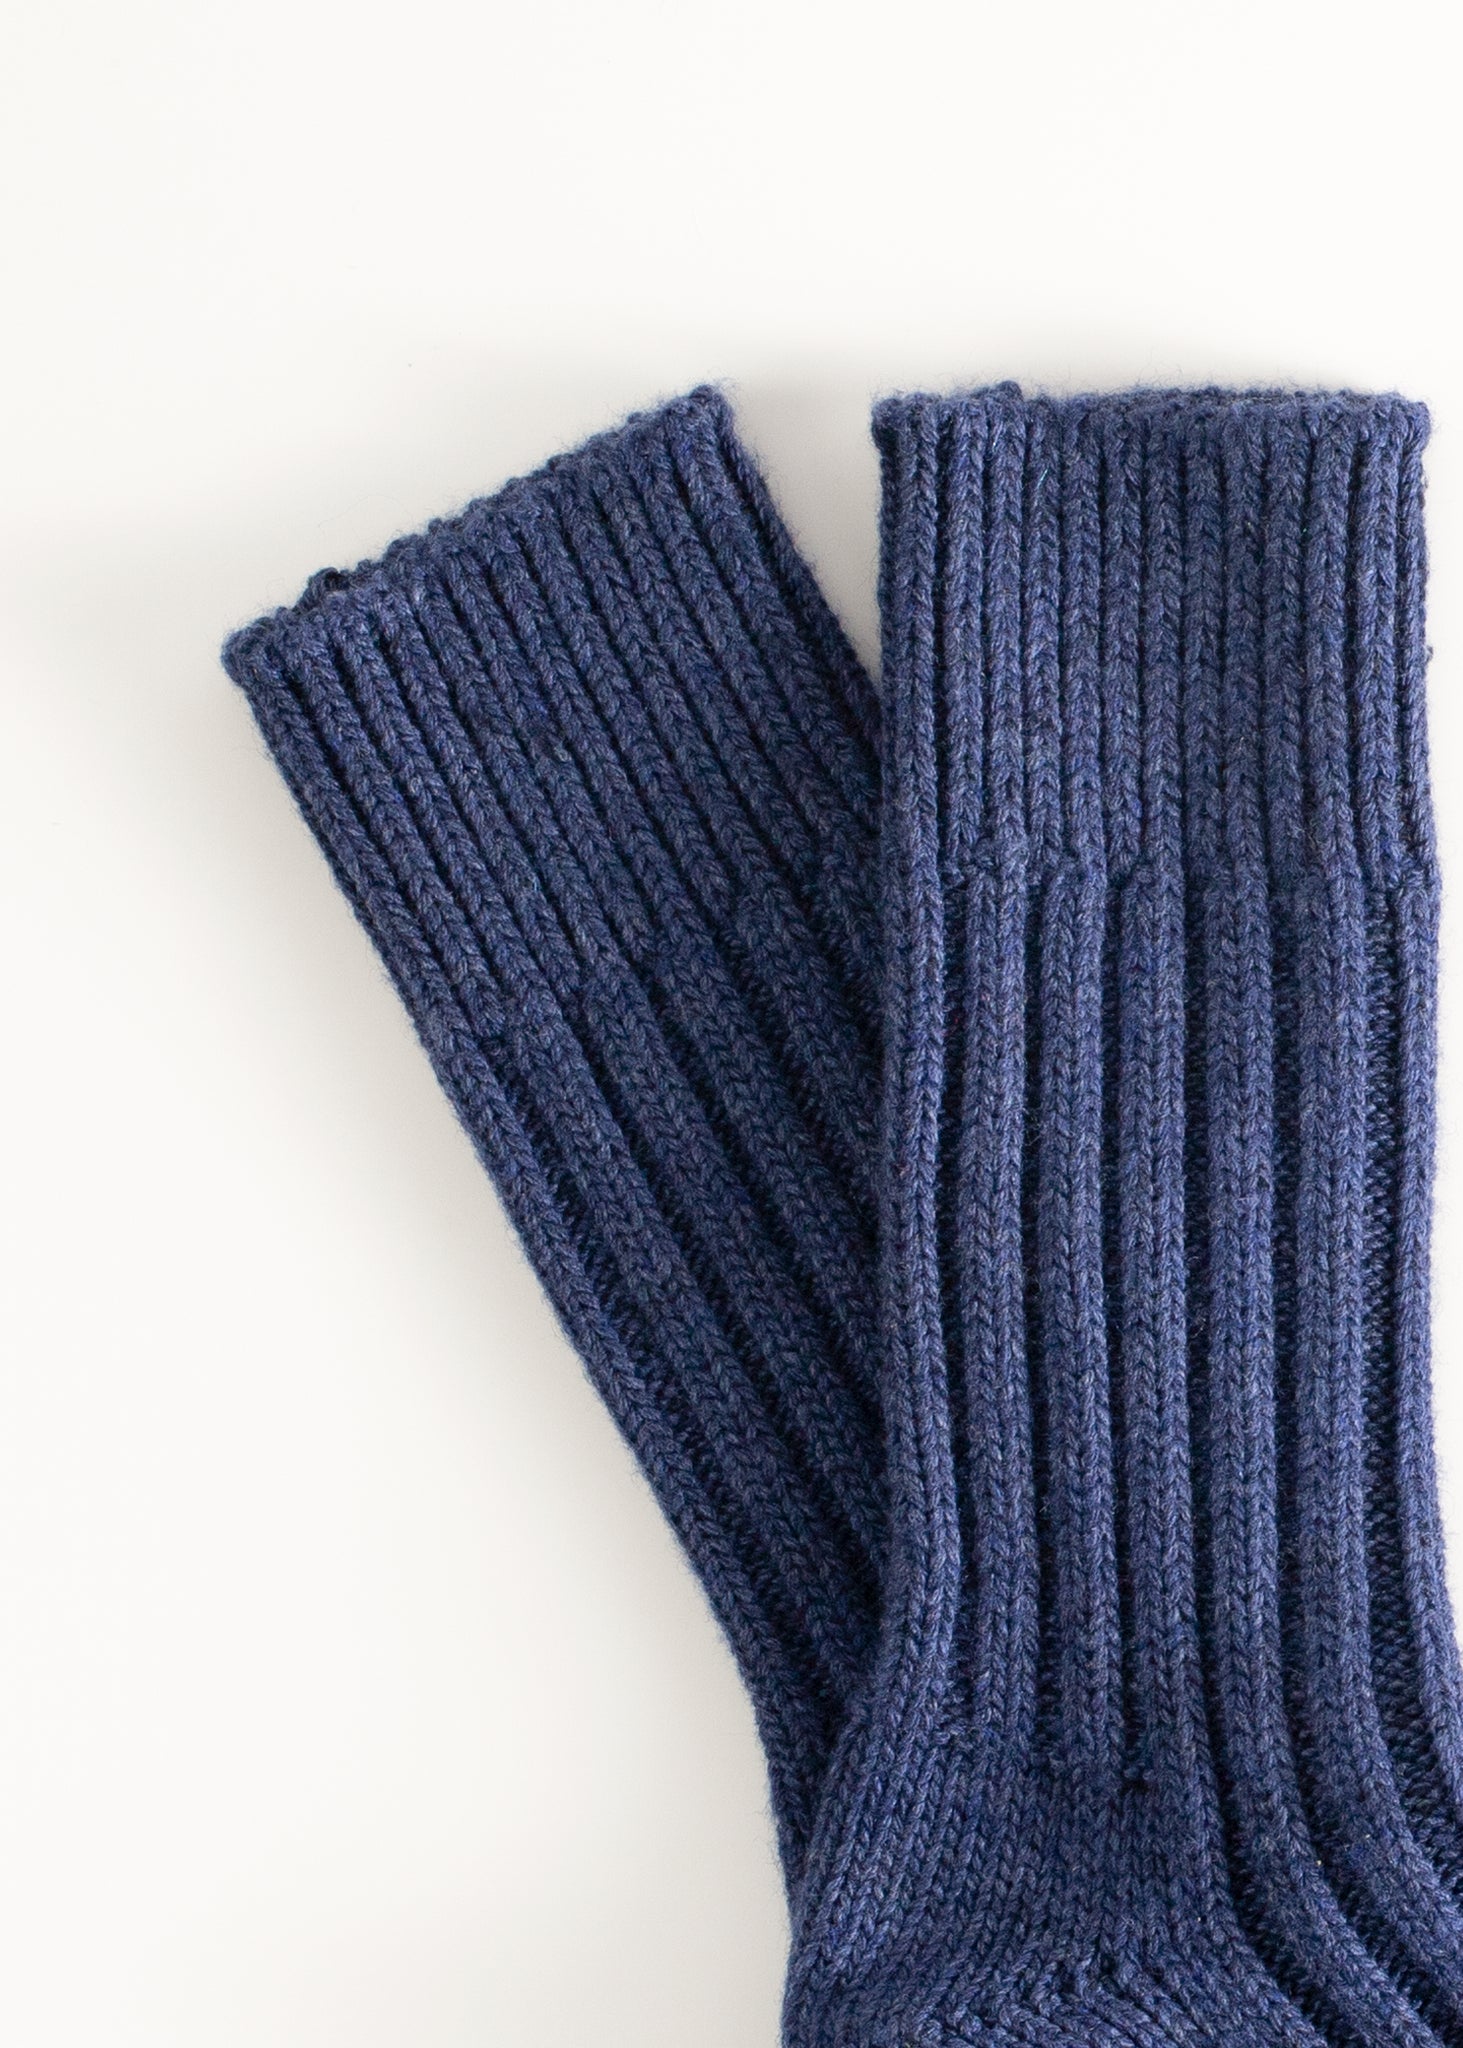 Thunders Love Wool Solid Dark Blue Socks